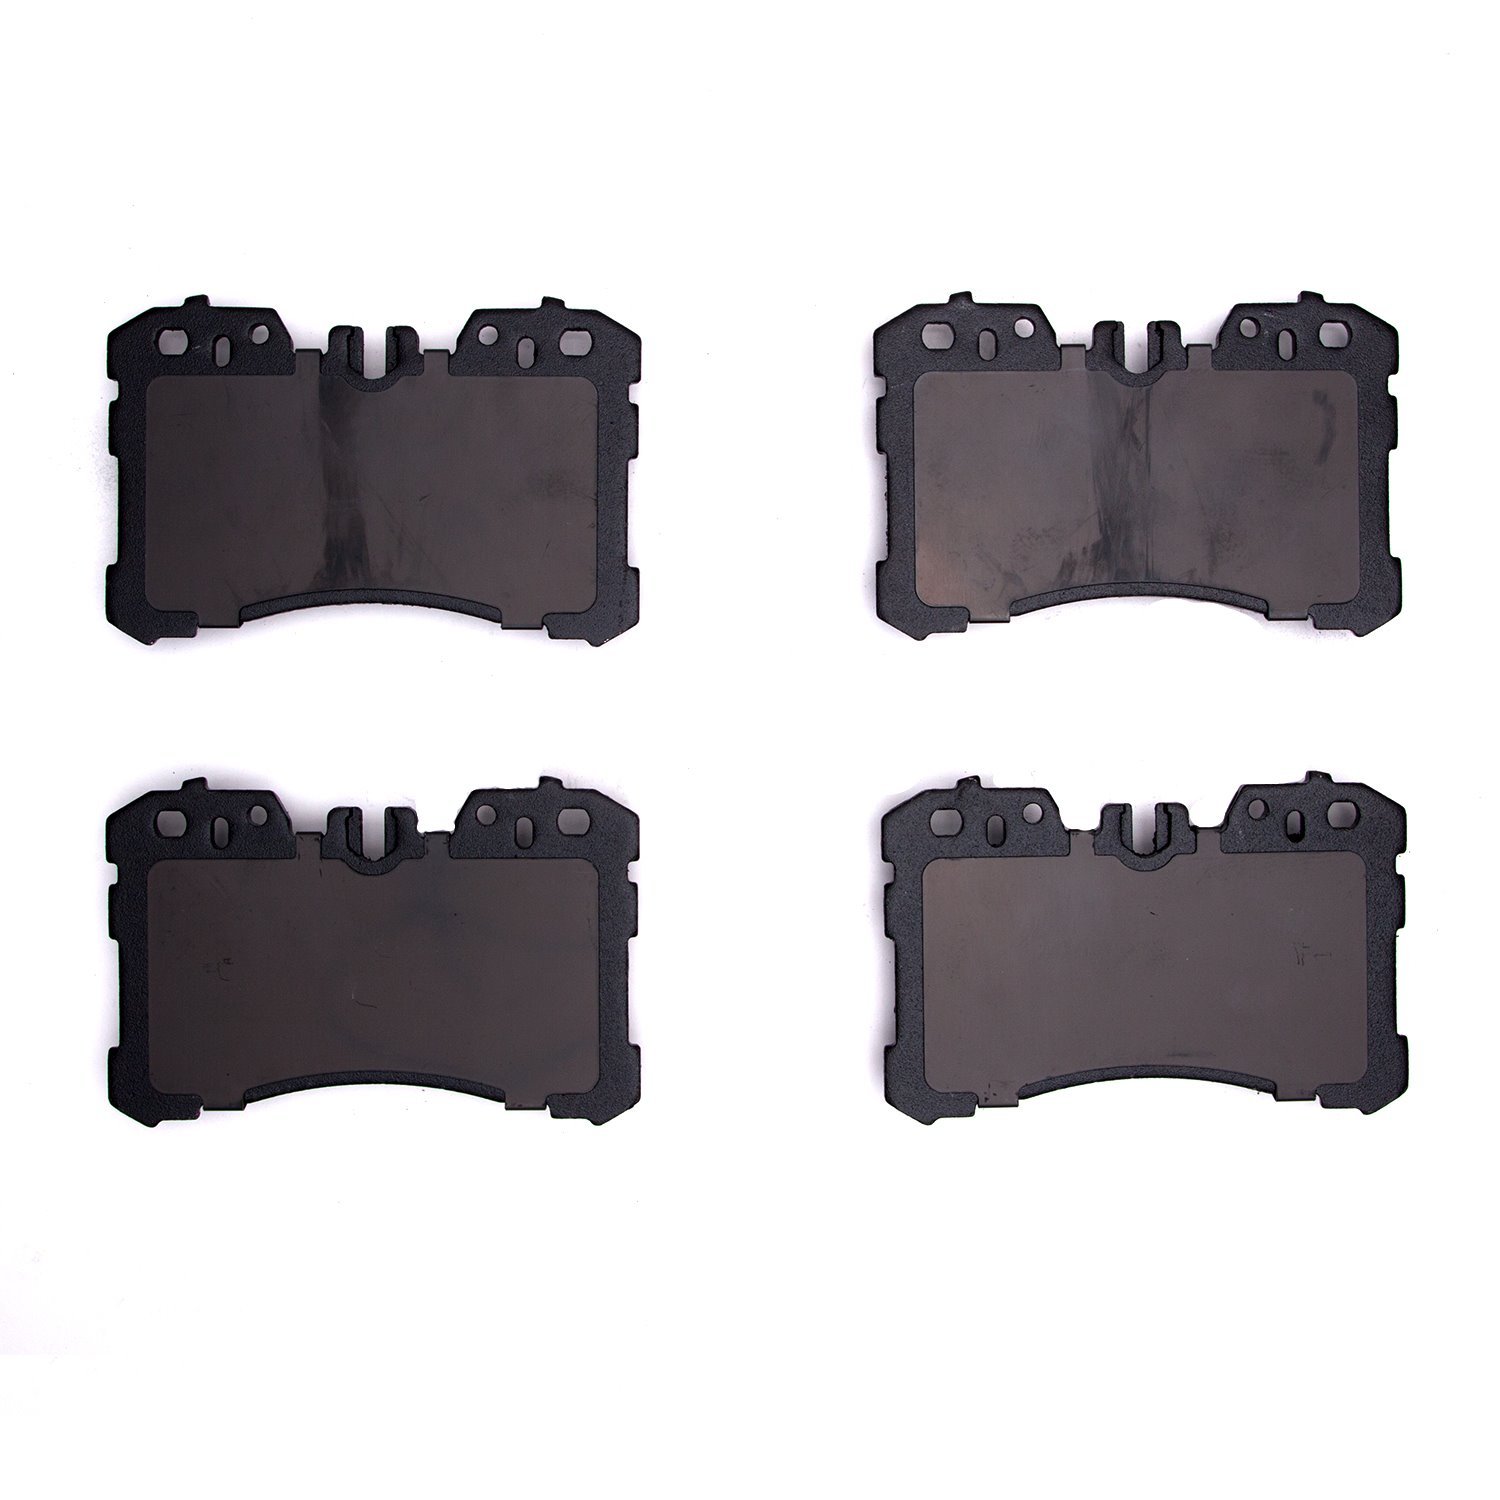 1600-1282-00 5000 Euro Ceramic Brake Pads, Fits Select Lexus/Toyota/Scion, Position: Front